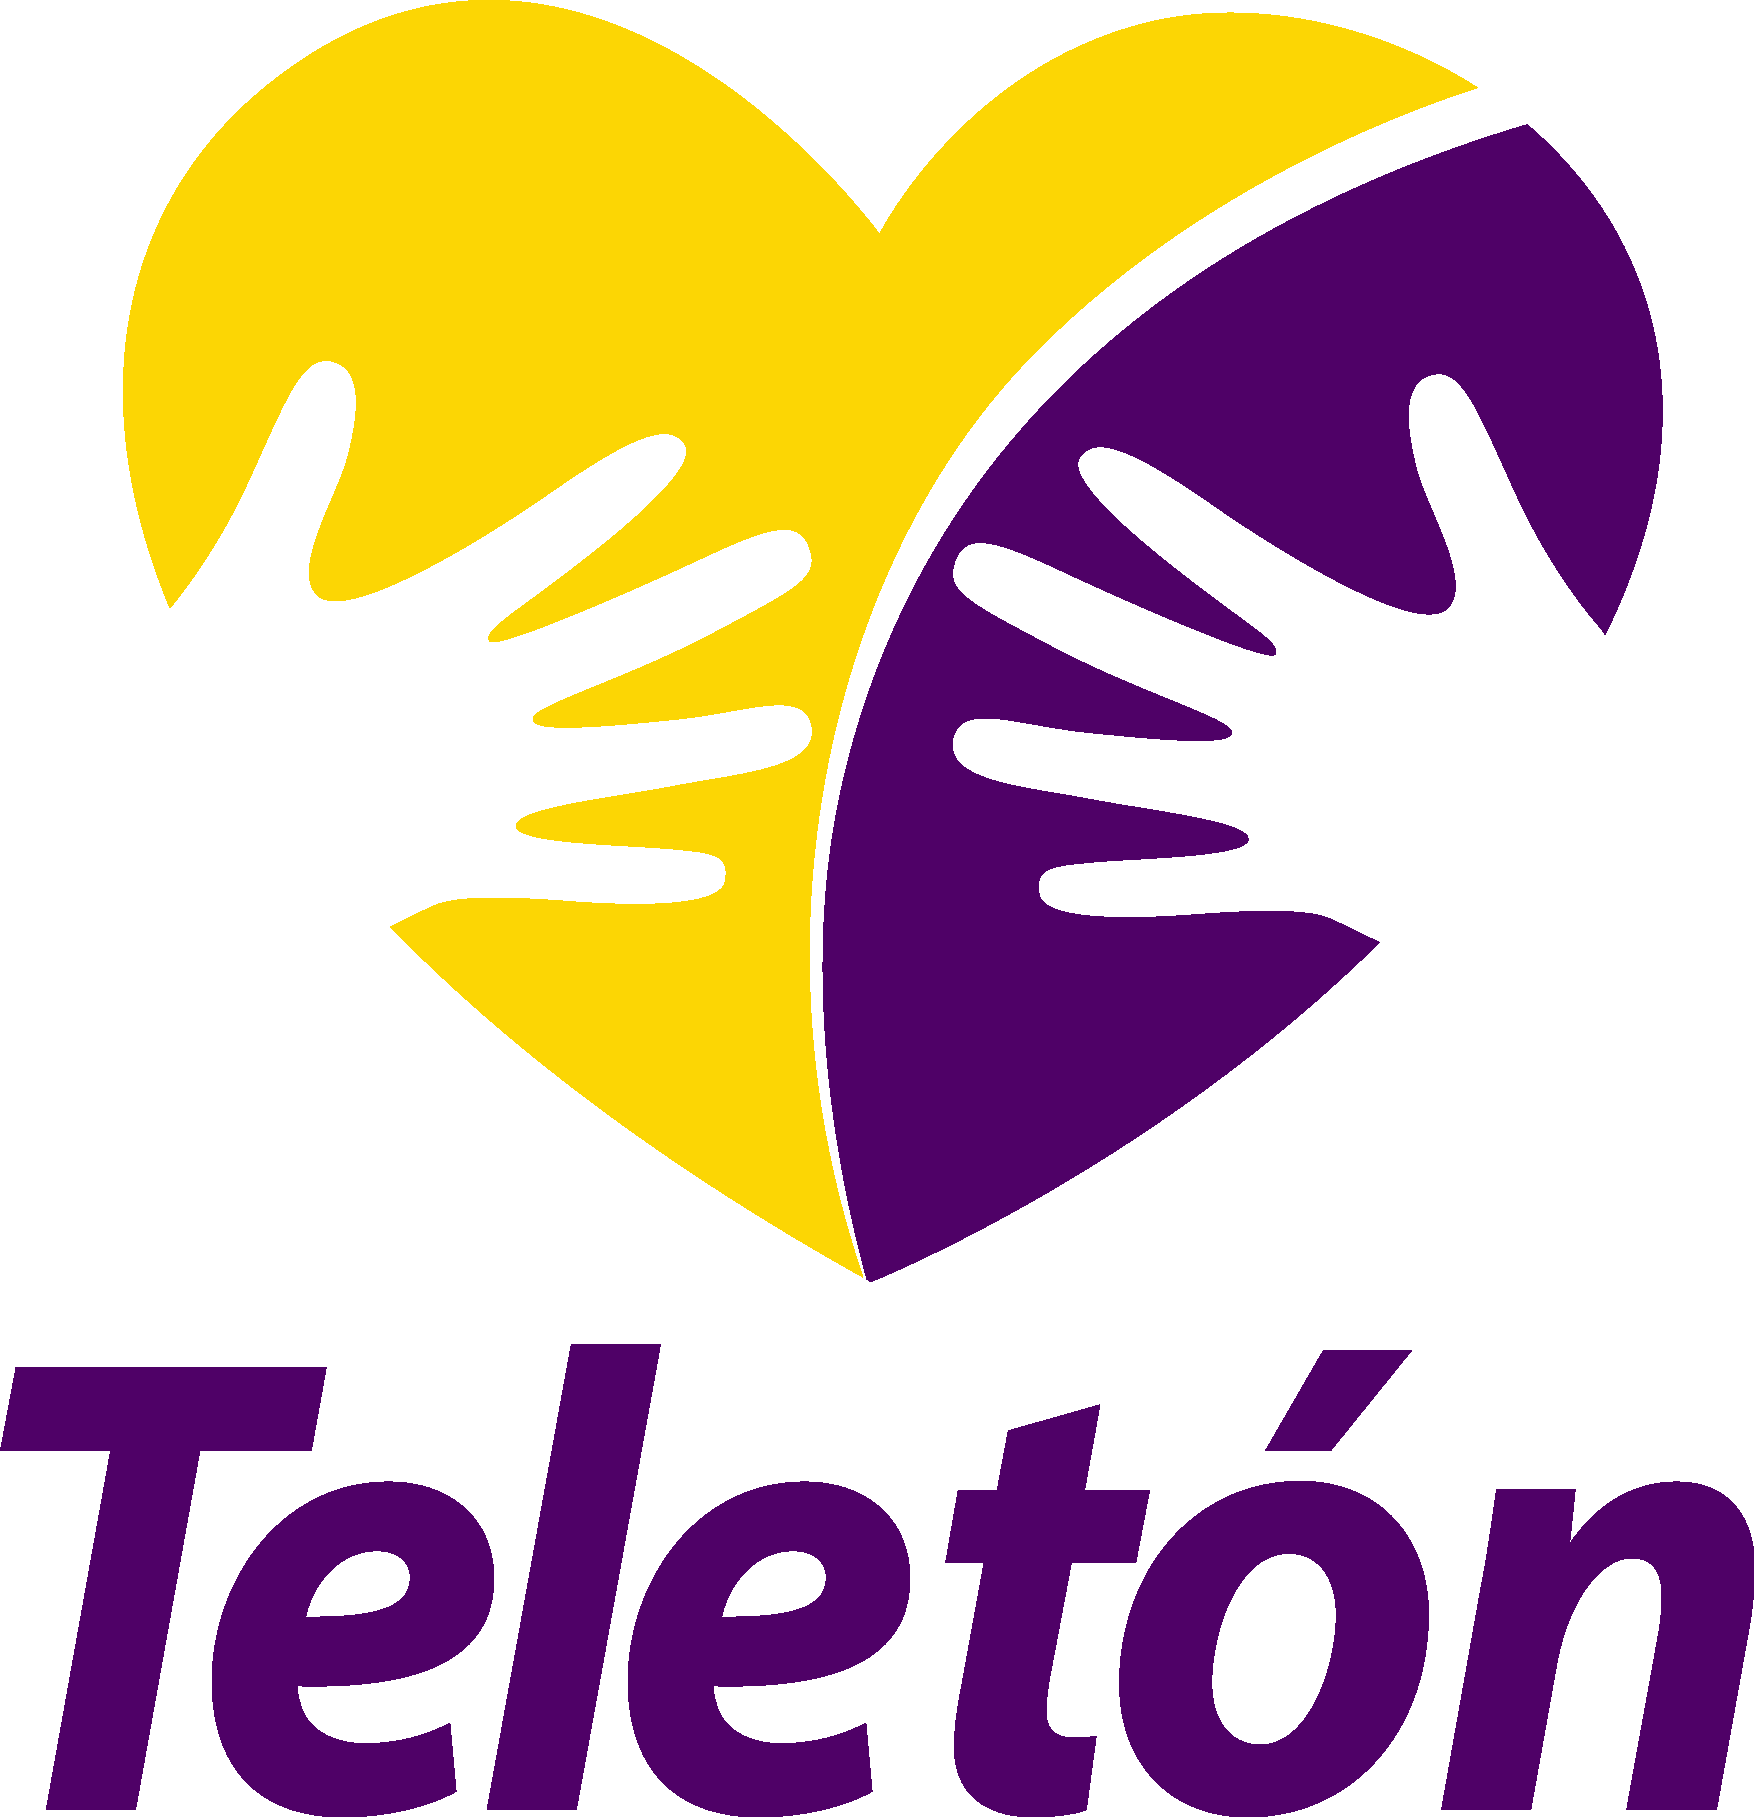 Teleton 2013 Logo Vector